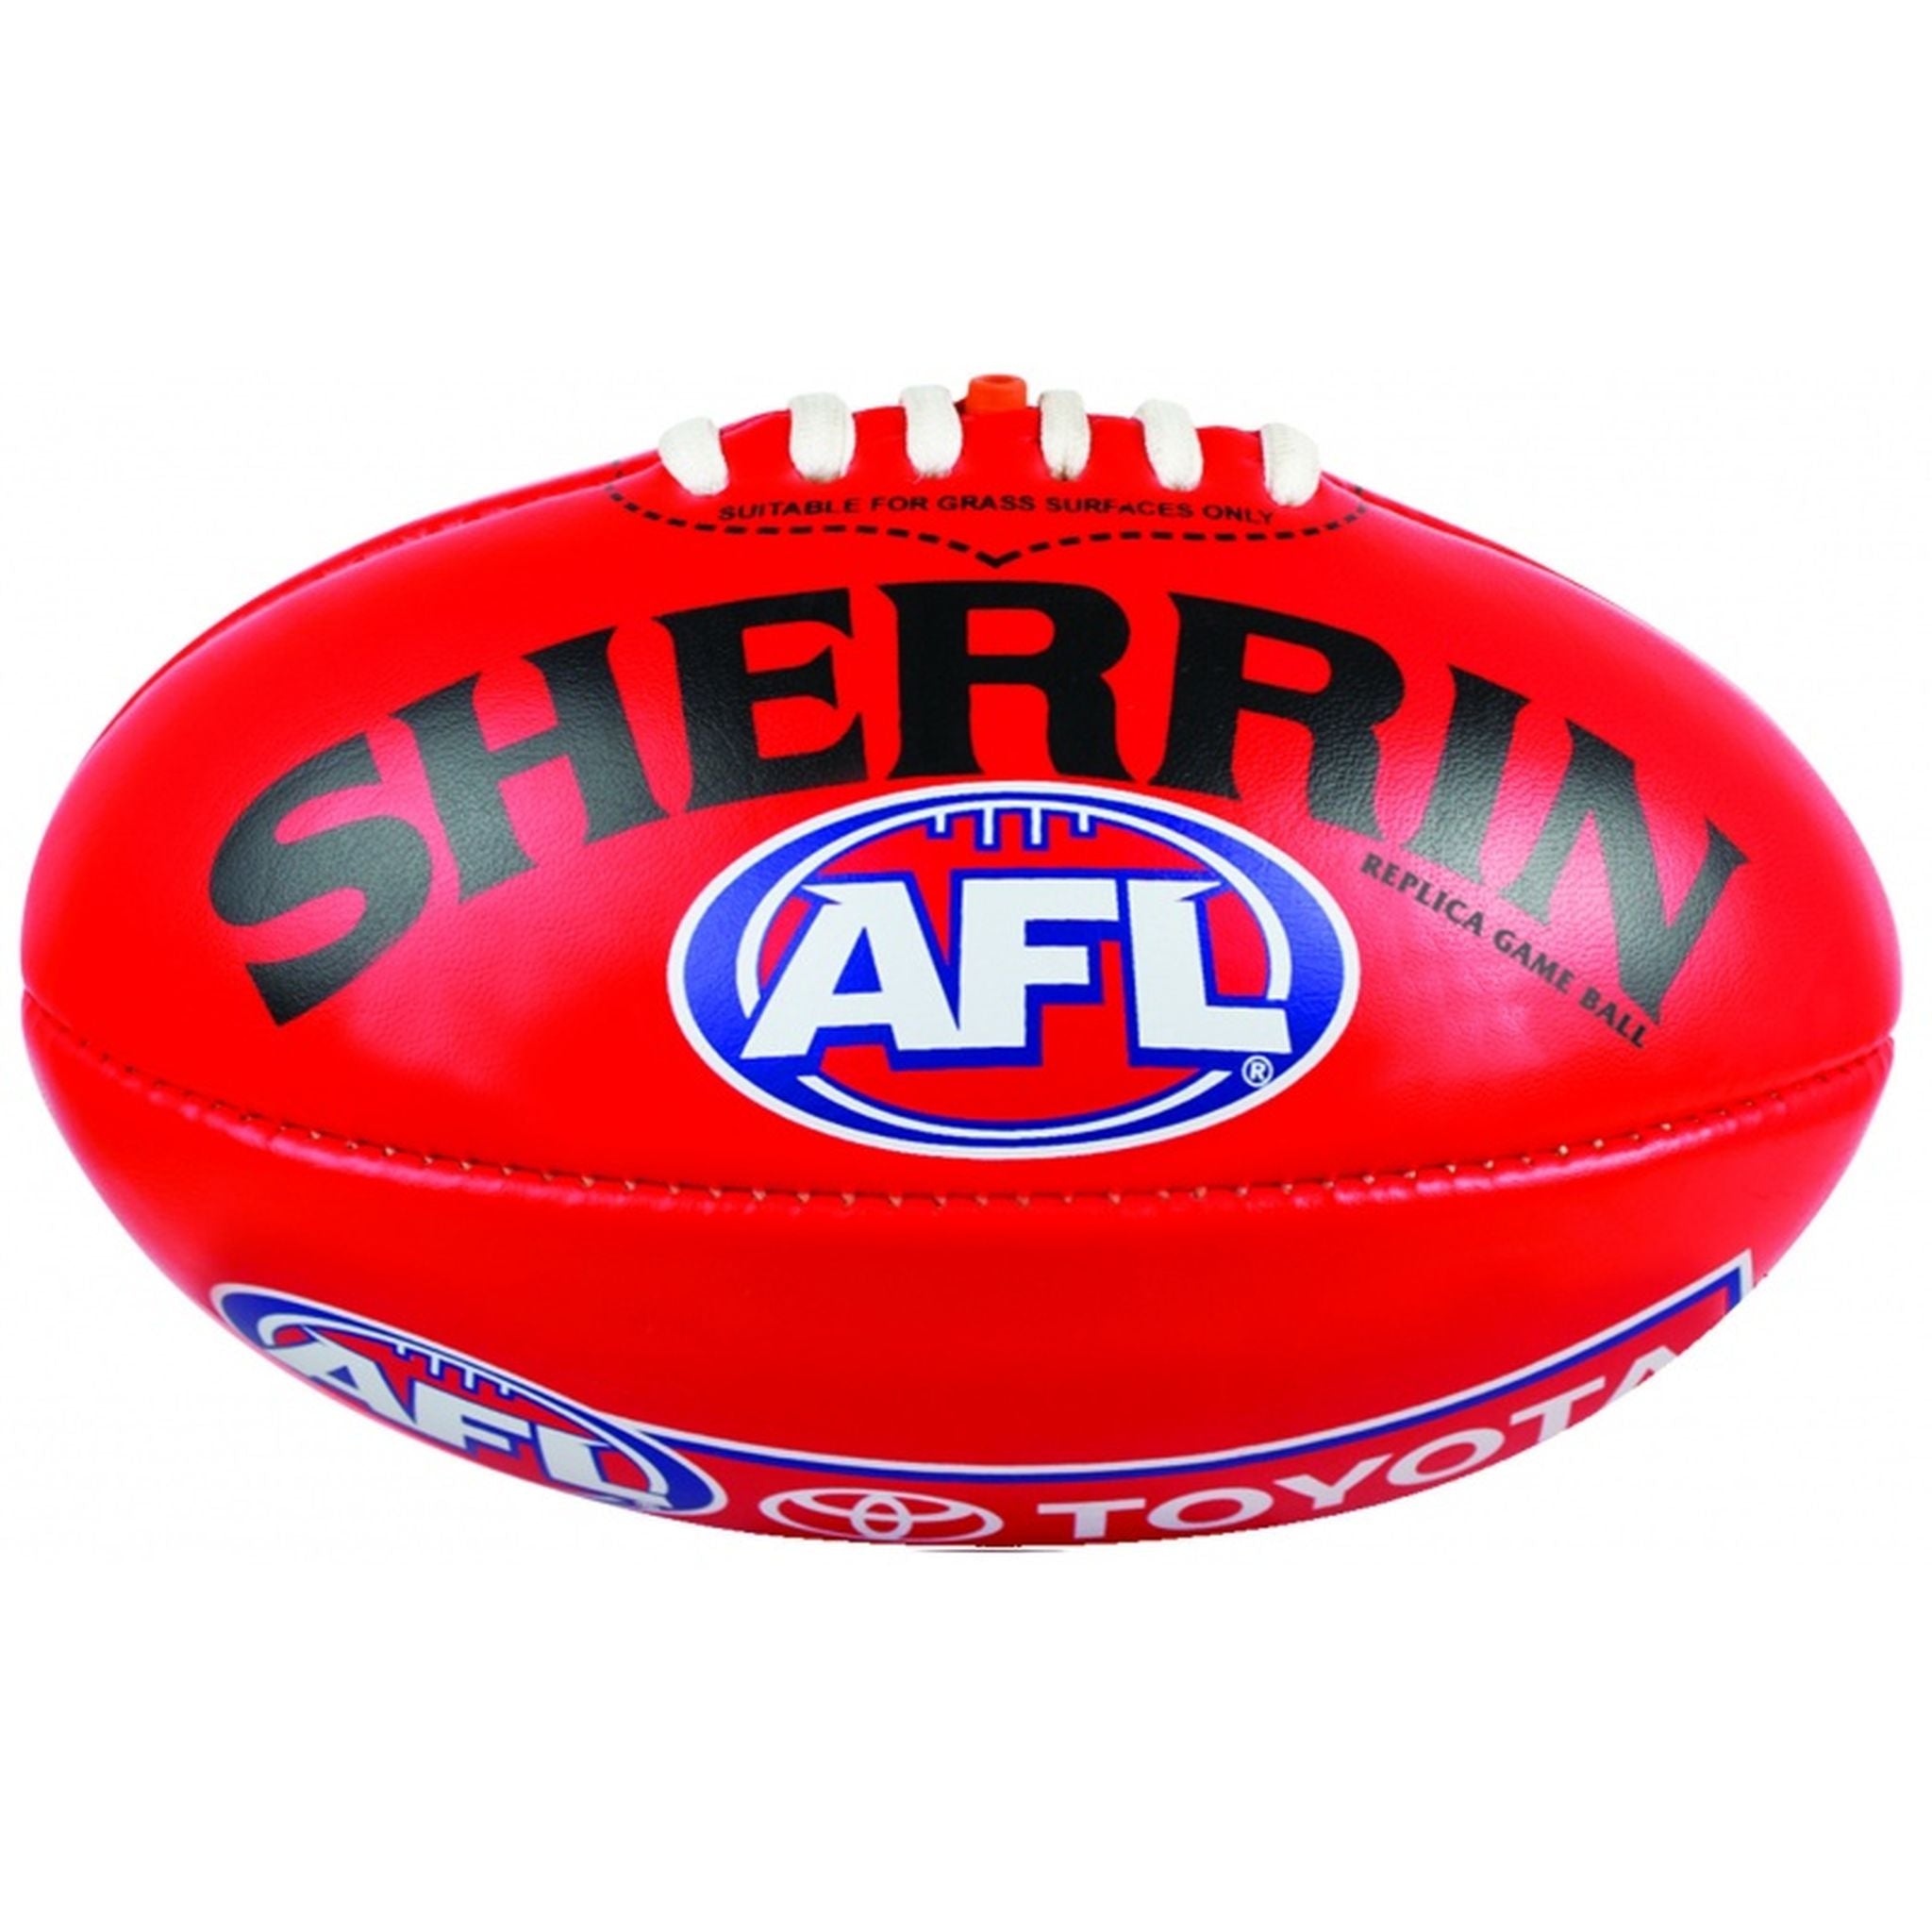 Sherrin AFL Replica Leather Training Football